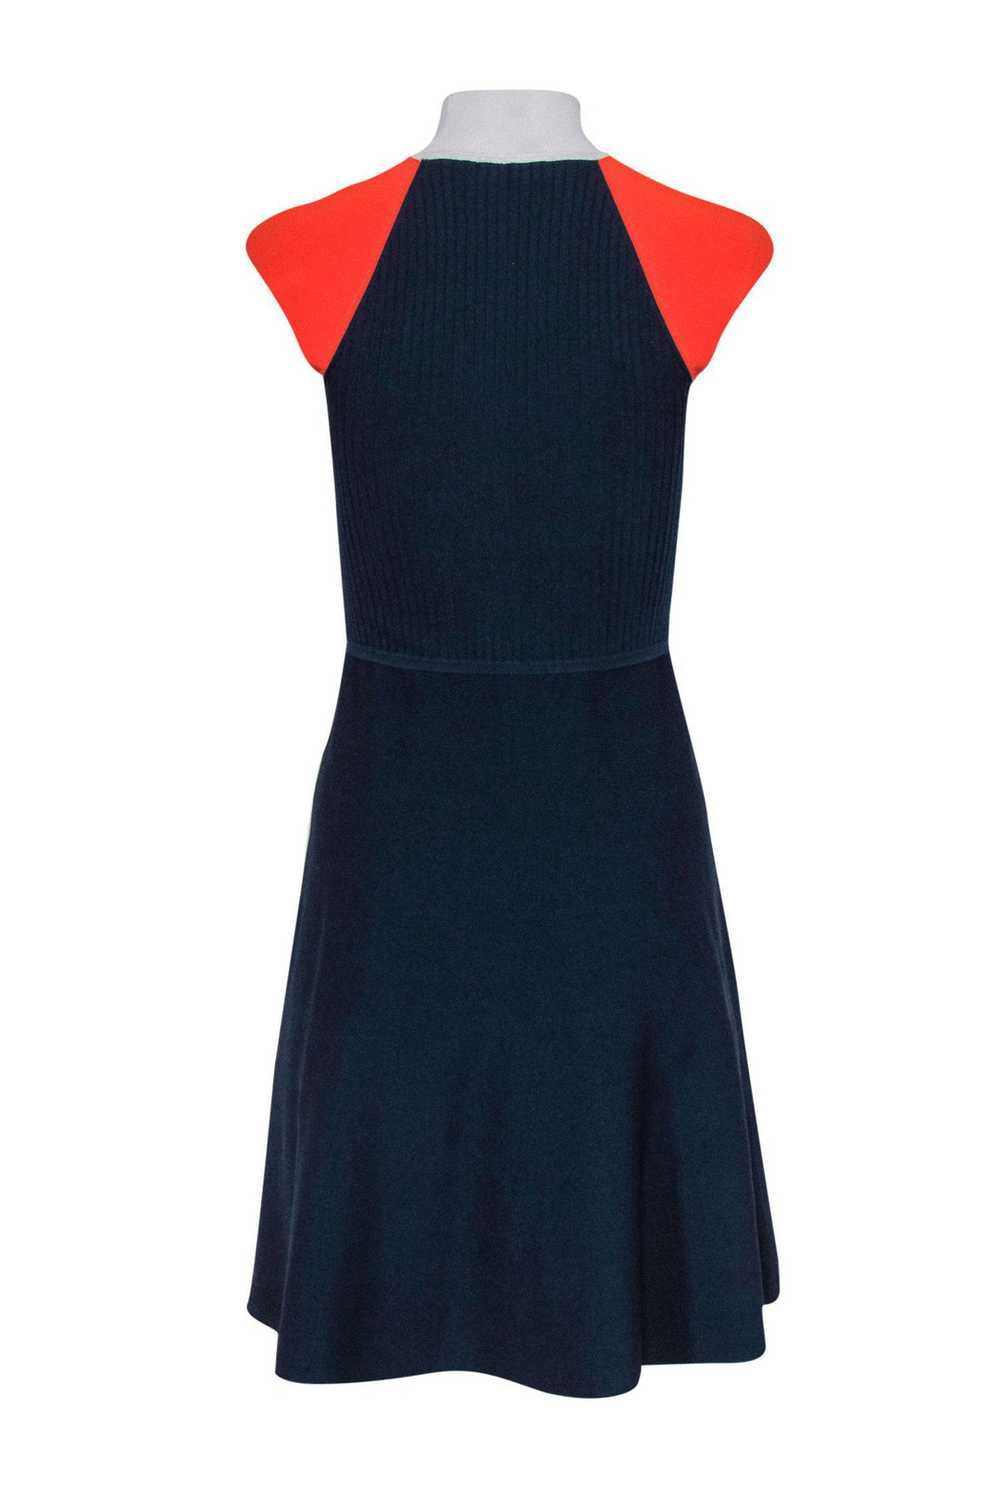 Karen Millen - Navy & Orange Ribbed Knit Short Sl… - image 3